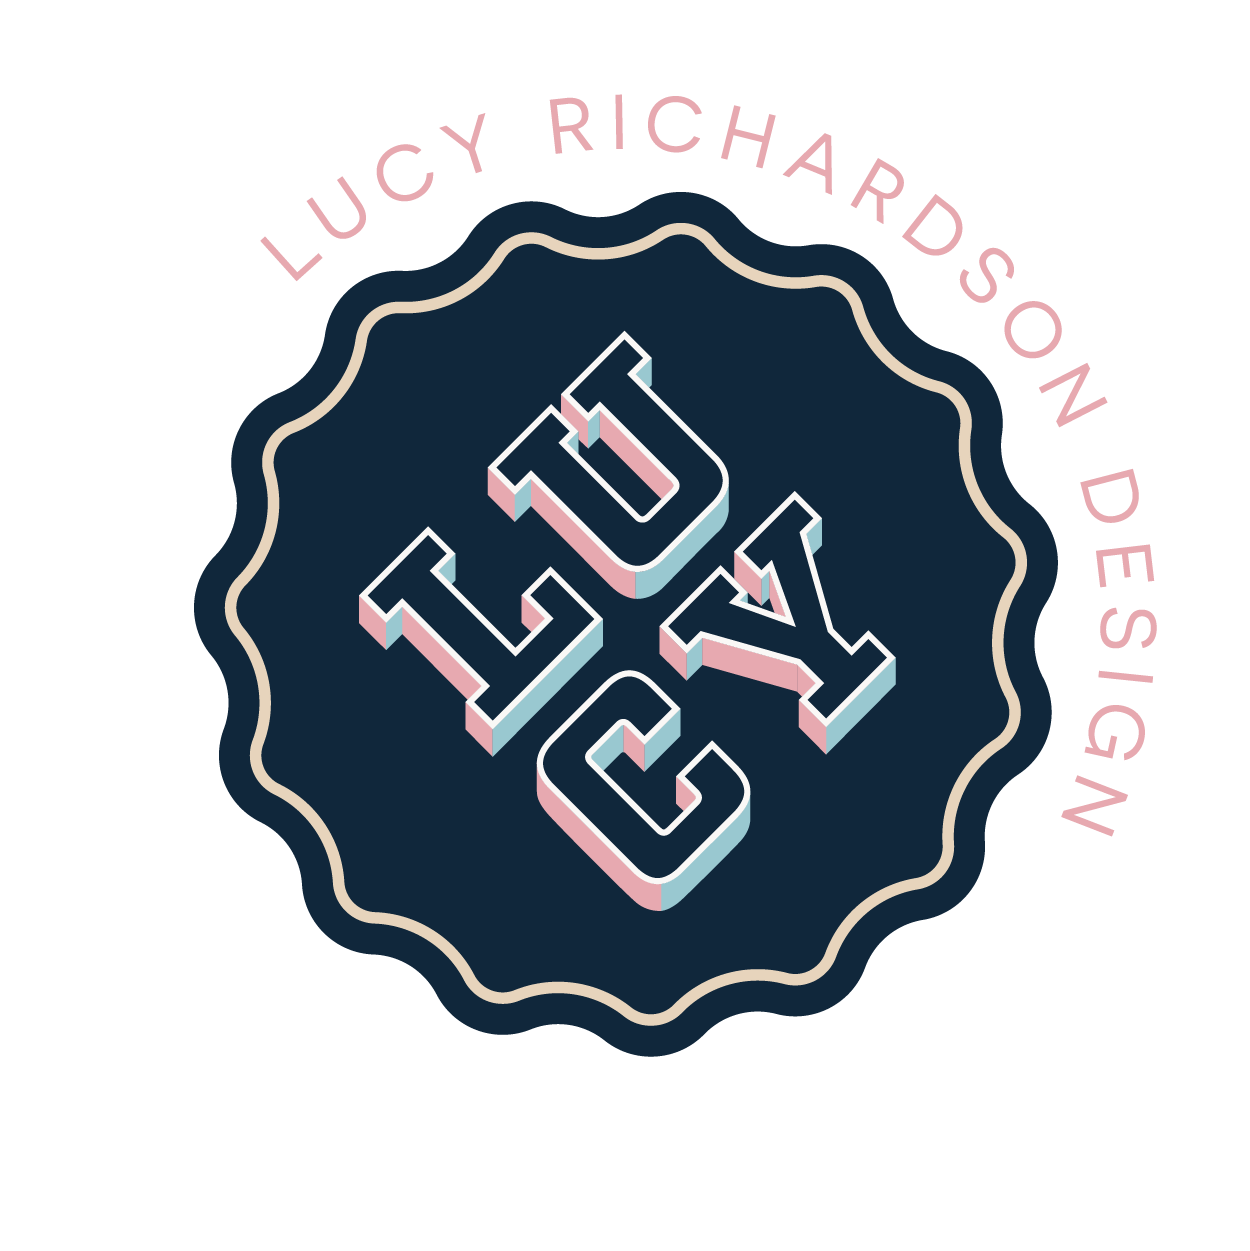 Lucy Richardson